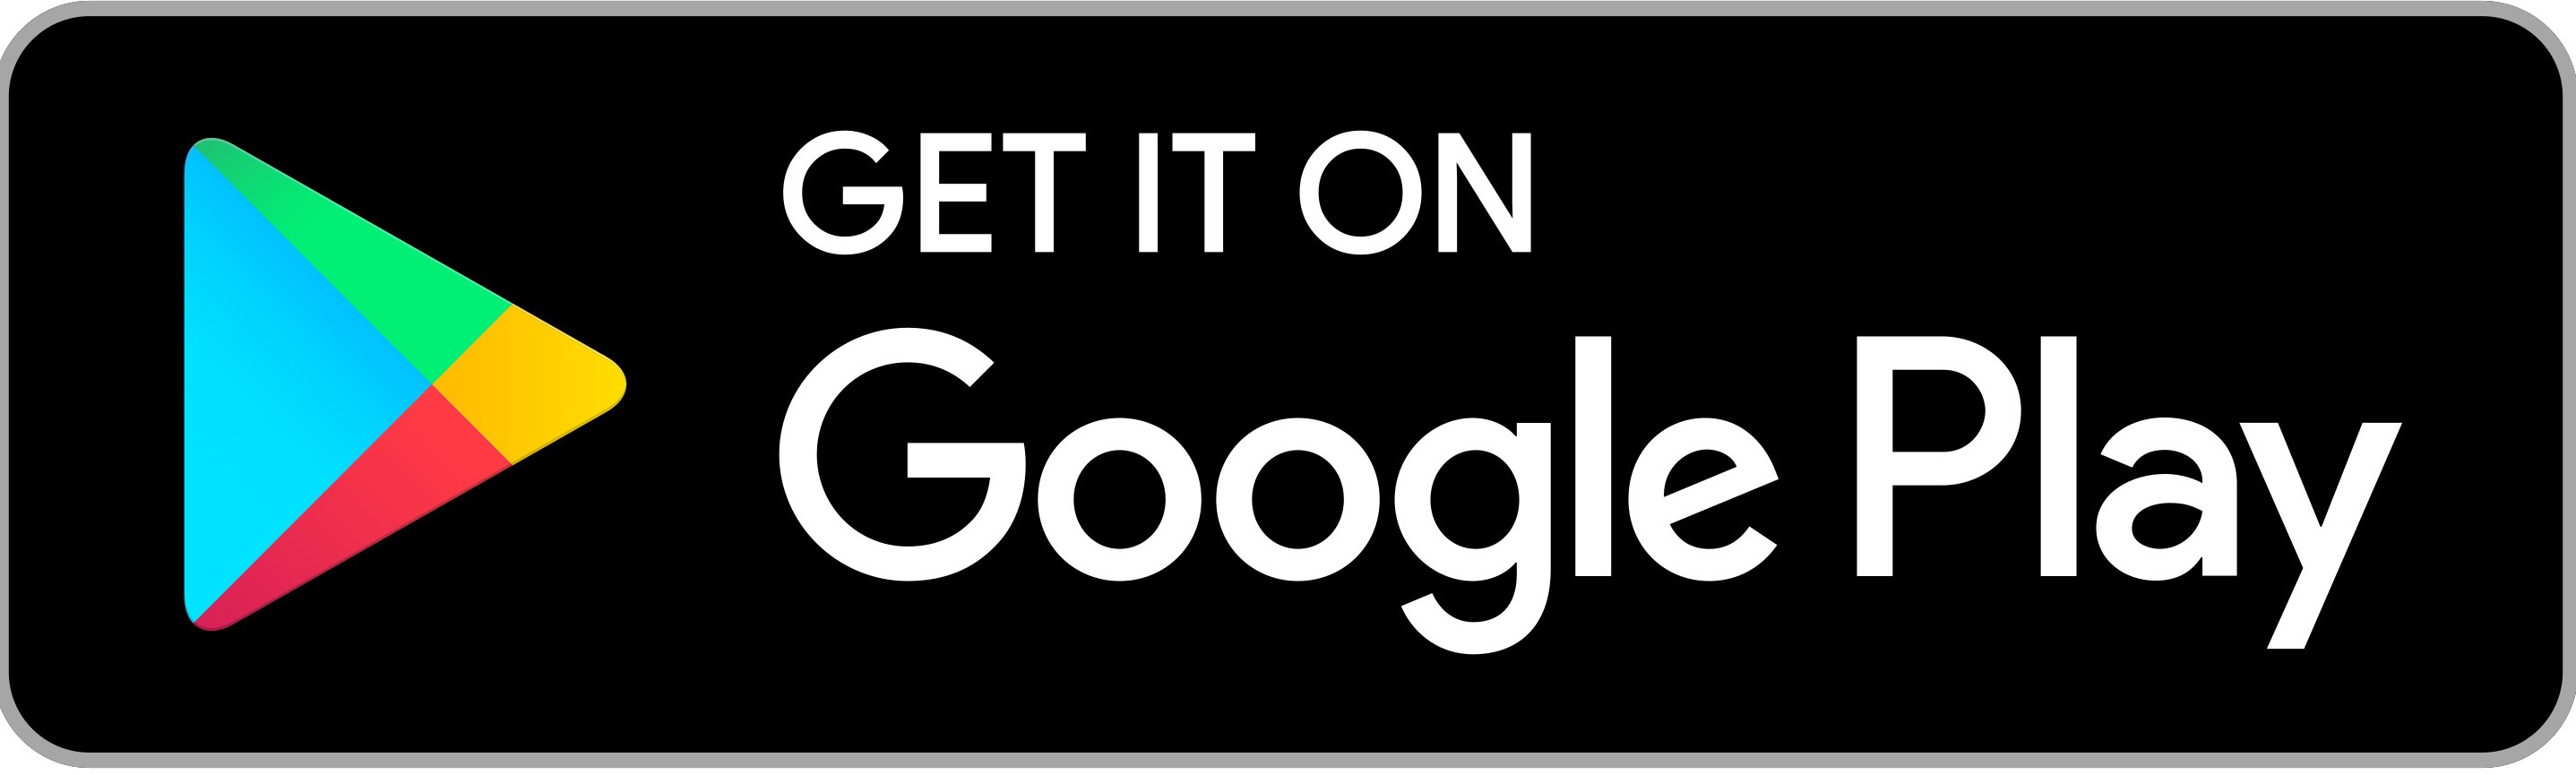 Google Play Logo.jpg